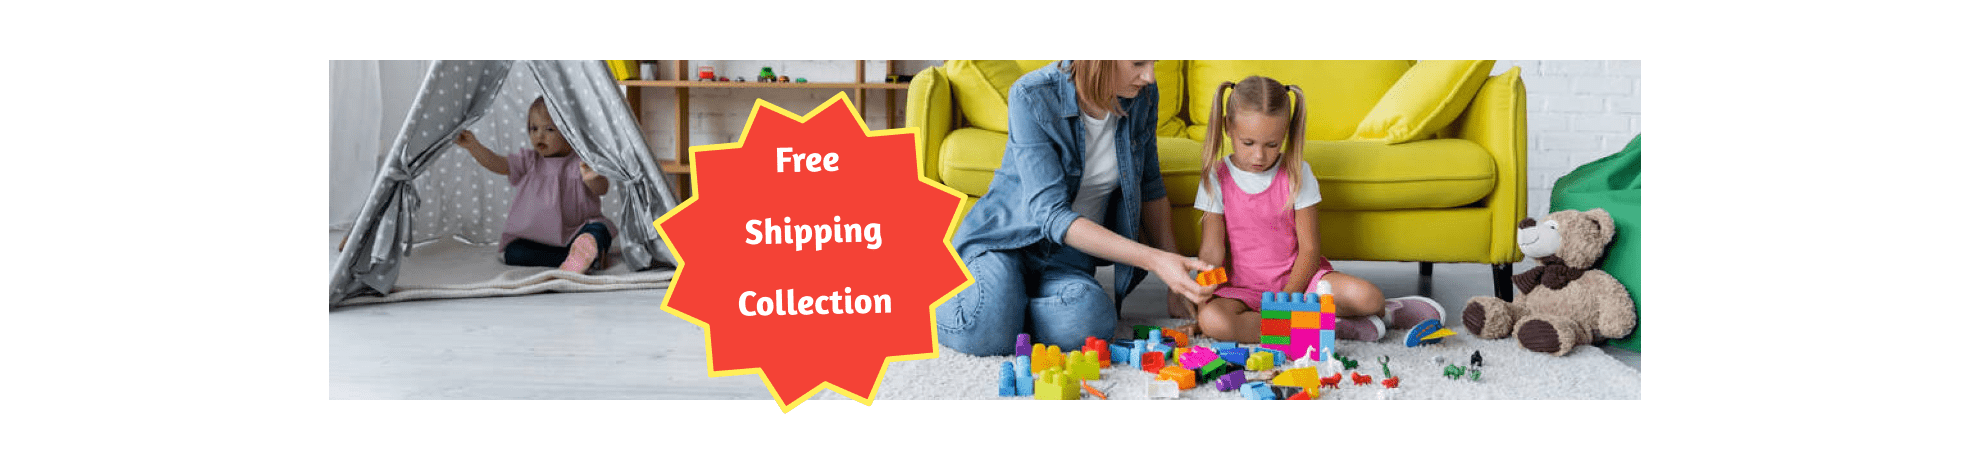 Free Shipping Collection - Kids Mega Mart